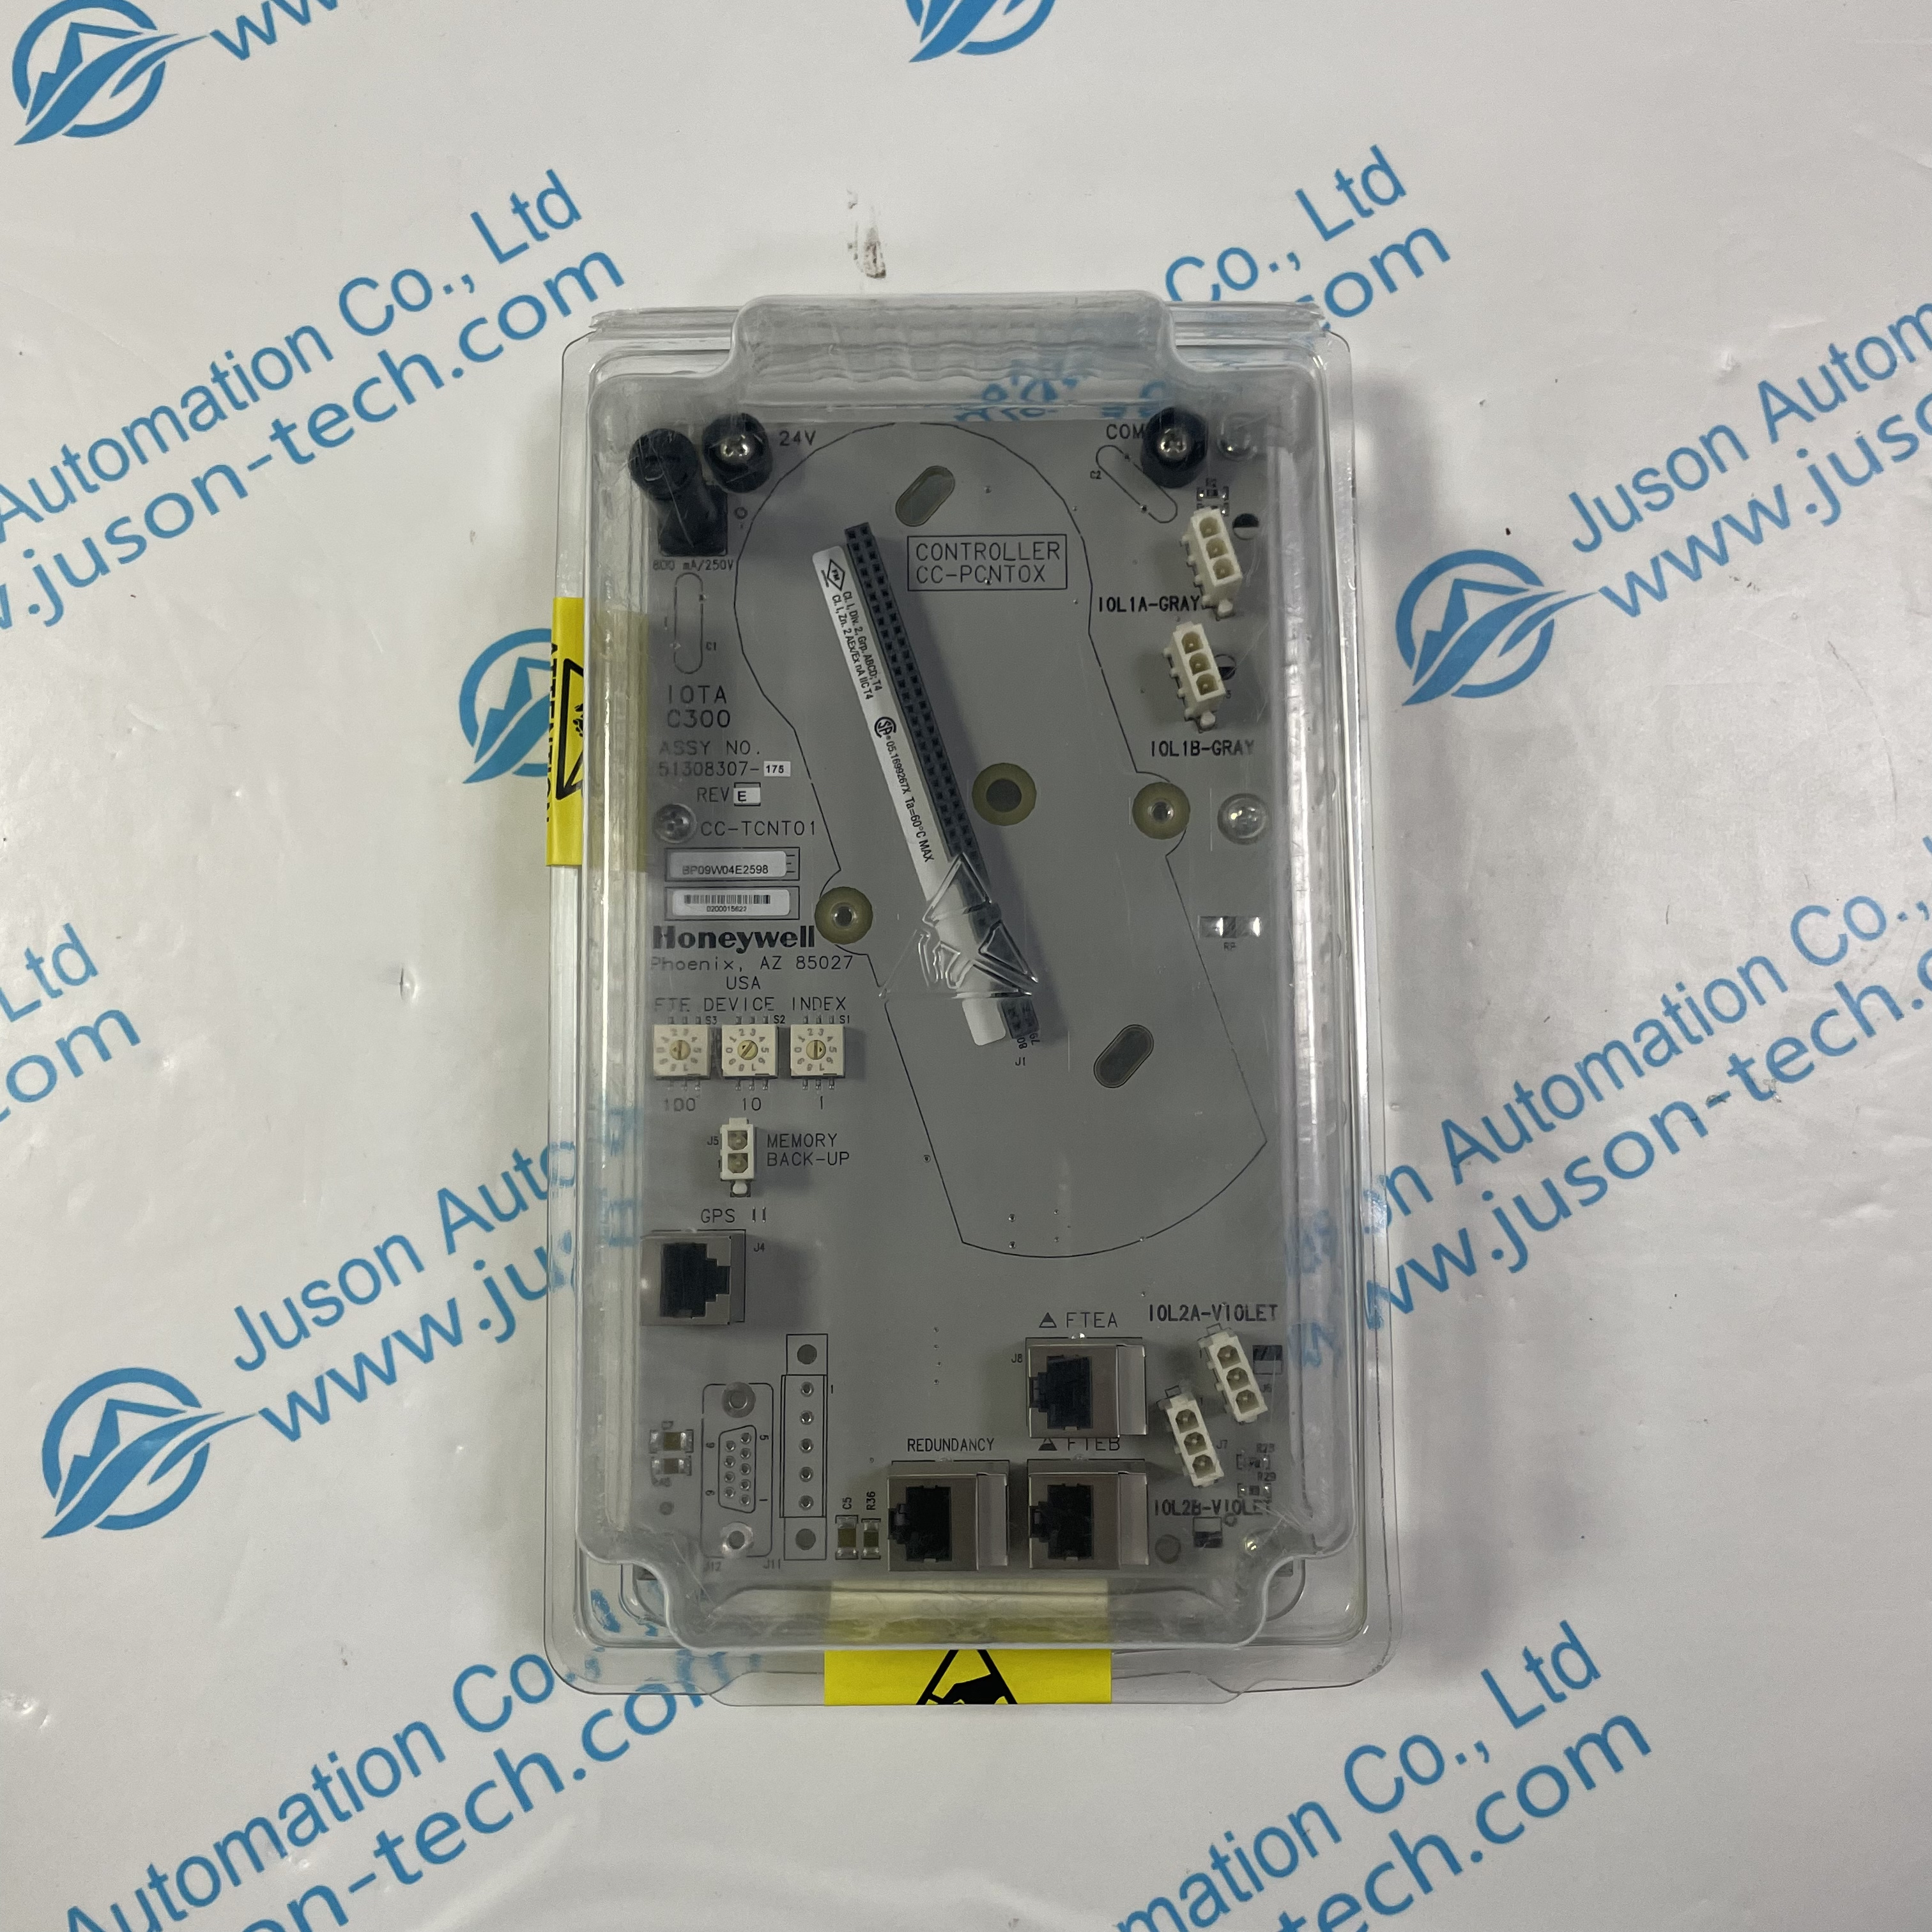 Honeywell controller module CC-TCNT01